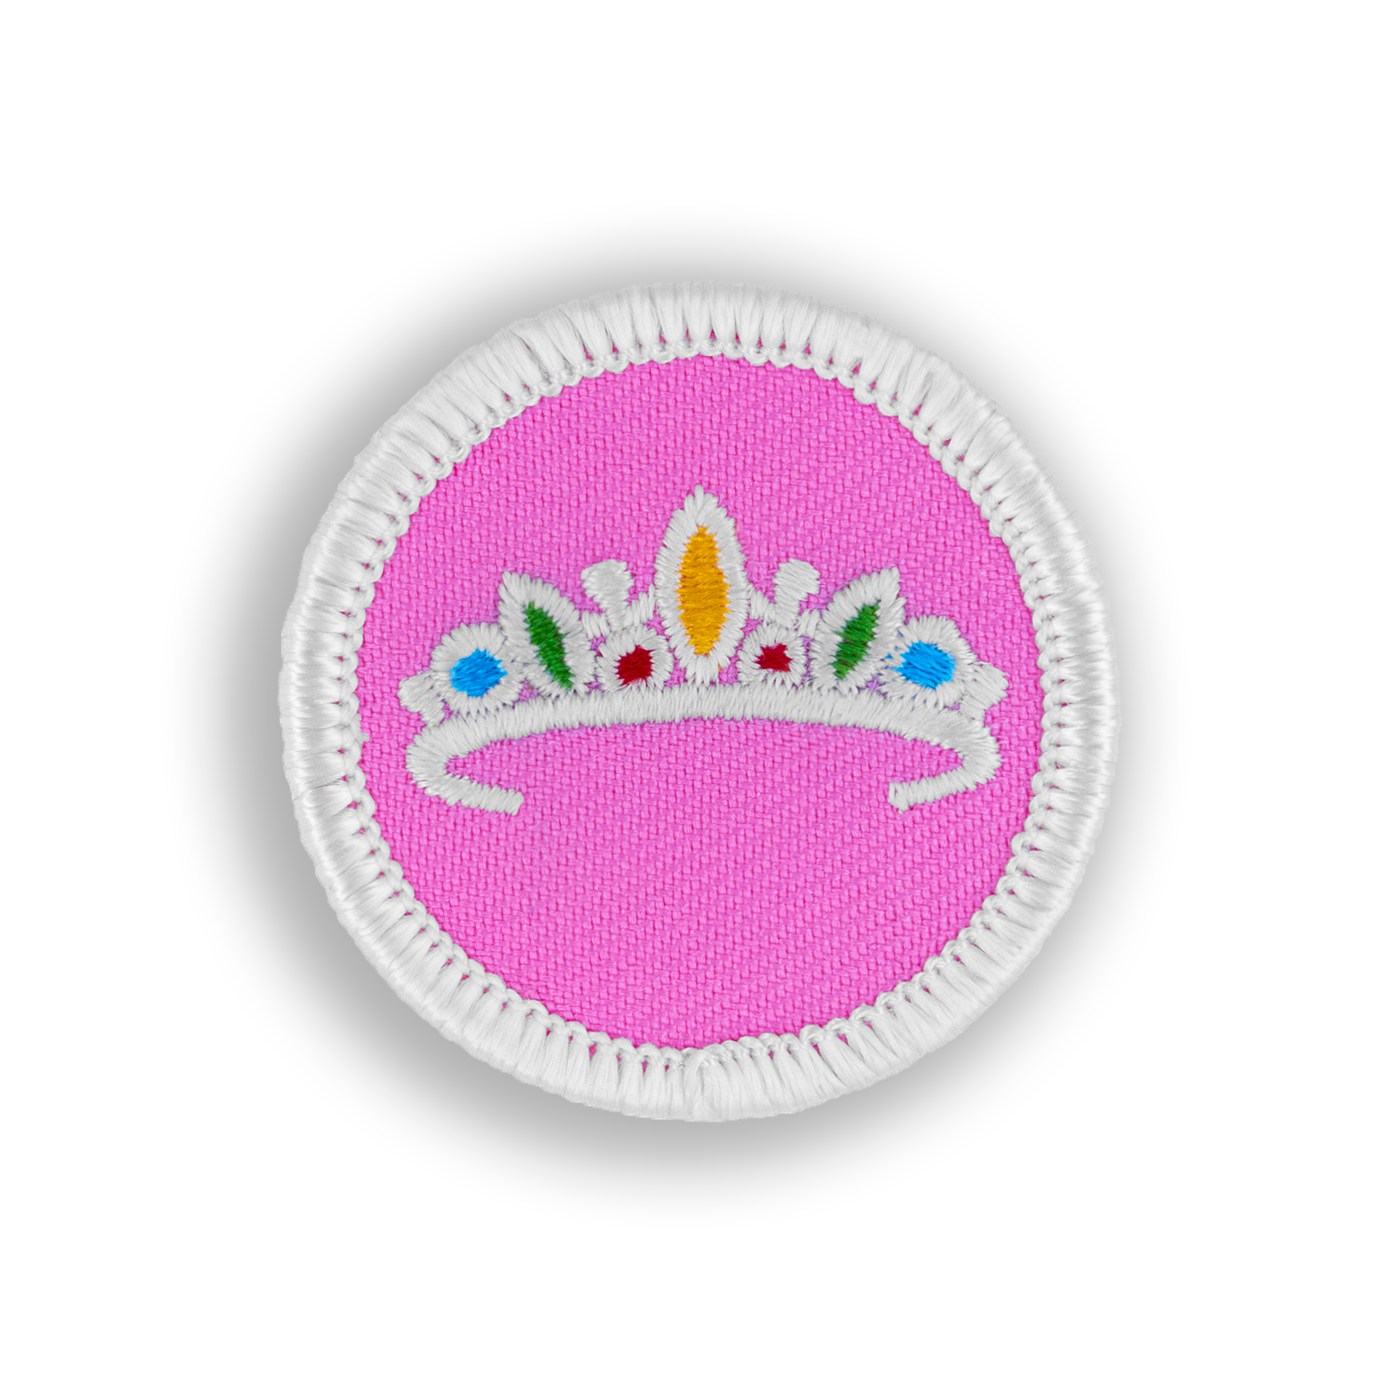 Princess Patch | Demerit Wear - Fake Merit Badges